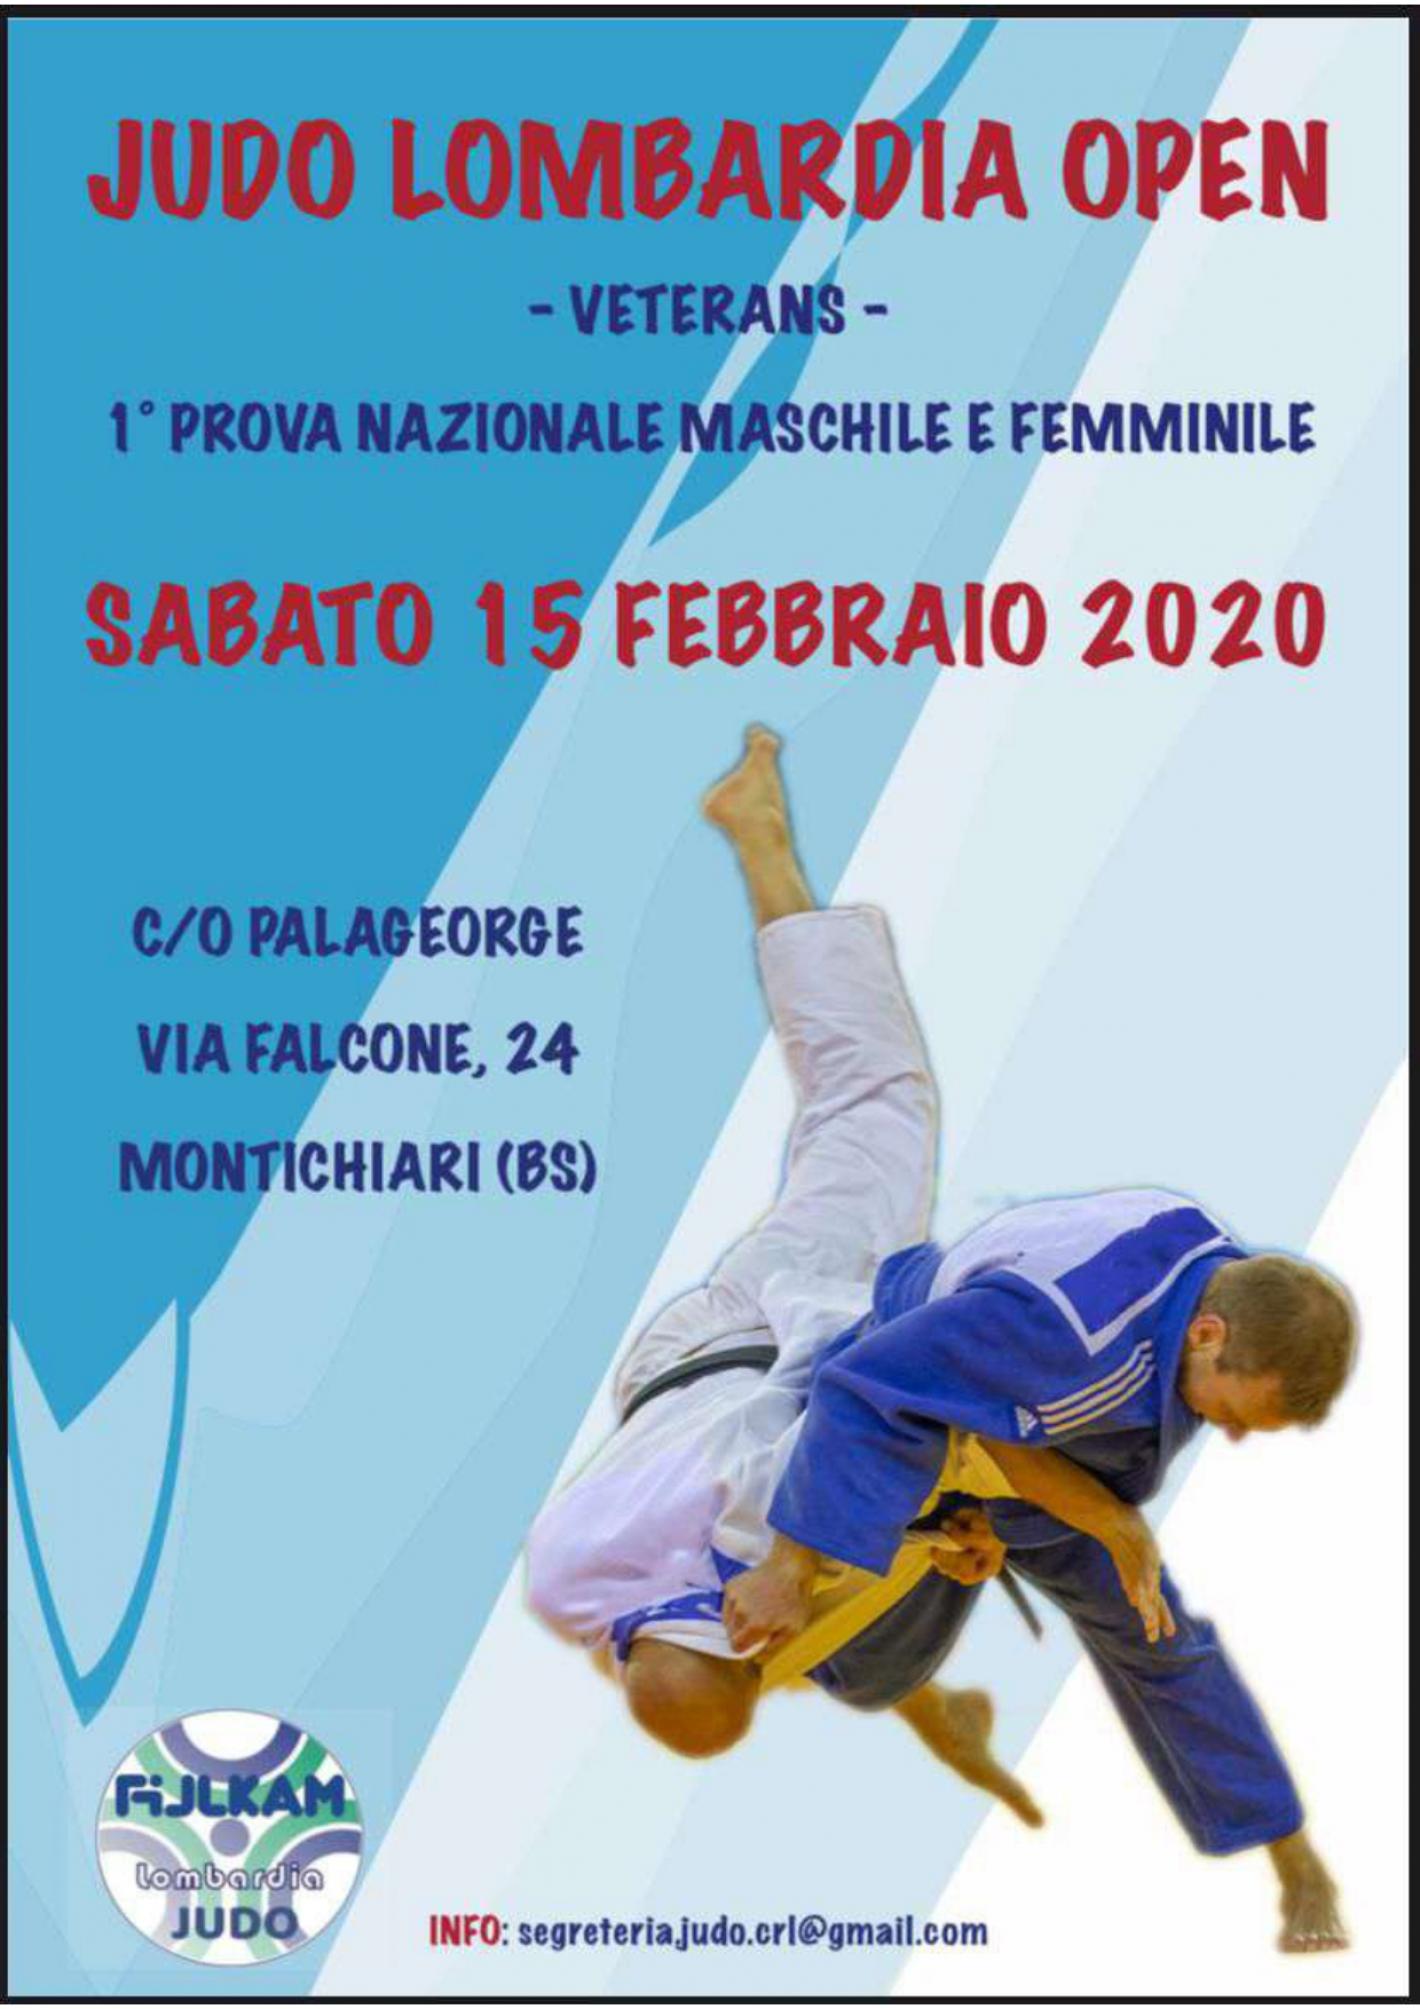 images/lombardia/news/veteran/medium/3_Judo_Lombardia_Open_Veterani_page-0001.jpg